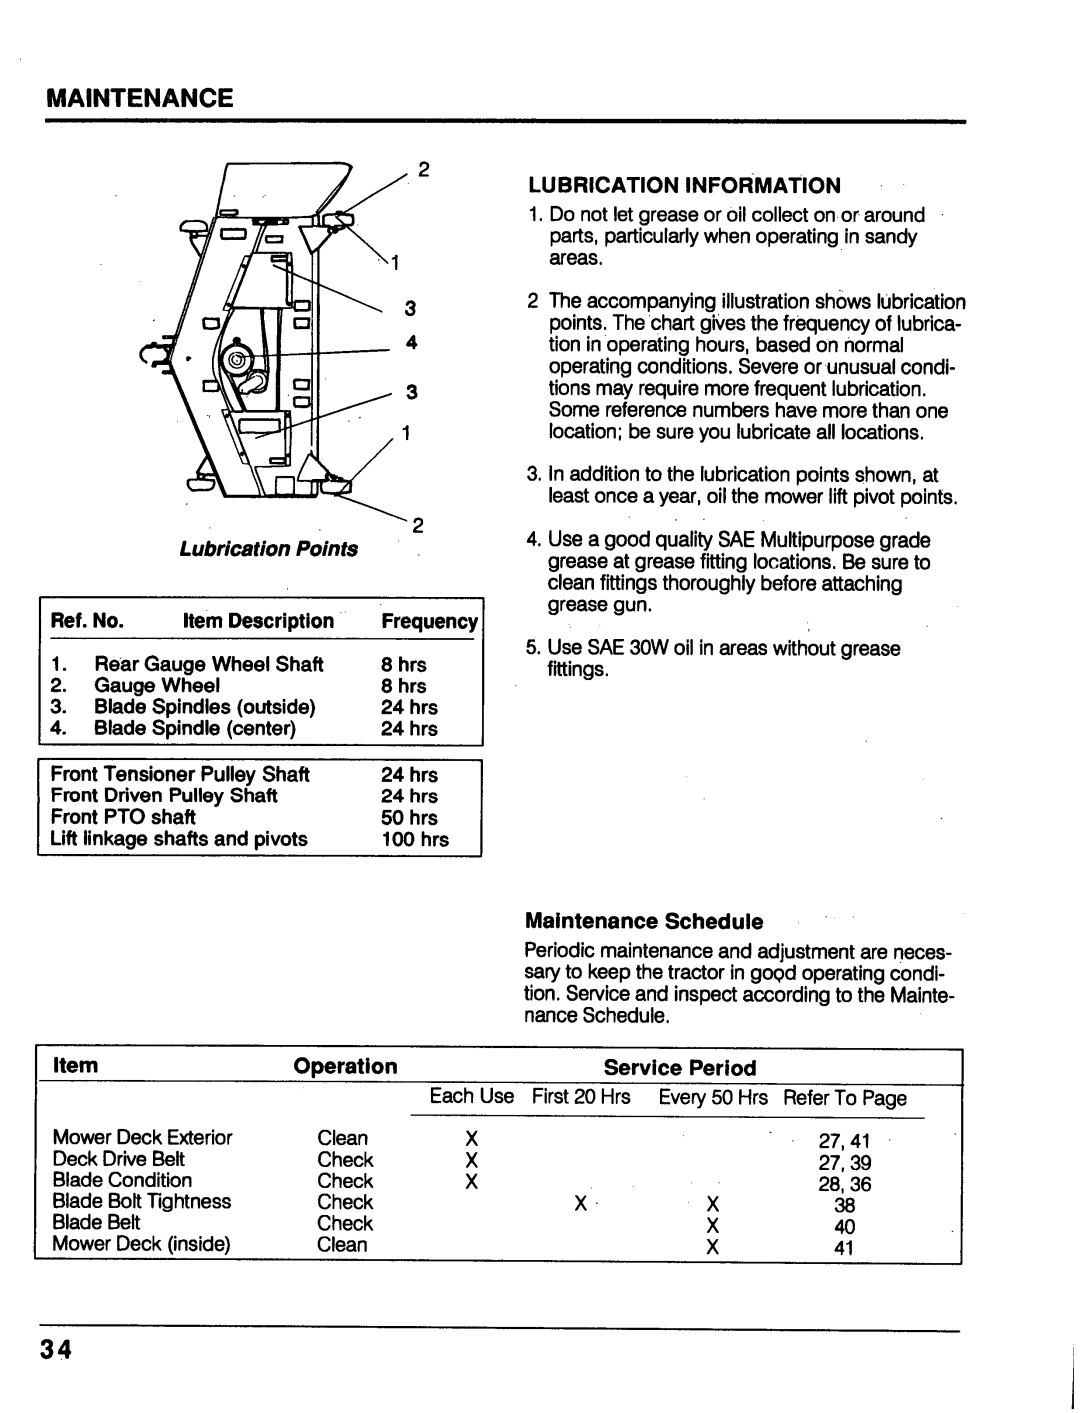 Honda Power Equipment MM52 manual Lubrication Points, Ref. No, Item Description, Rear Gauge Wheel Shaft, 8 hrs, Operation 